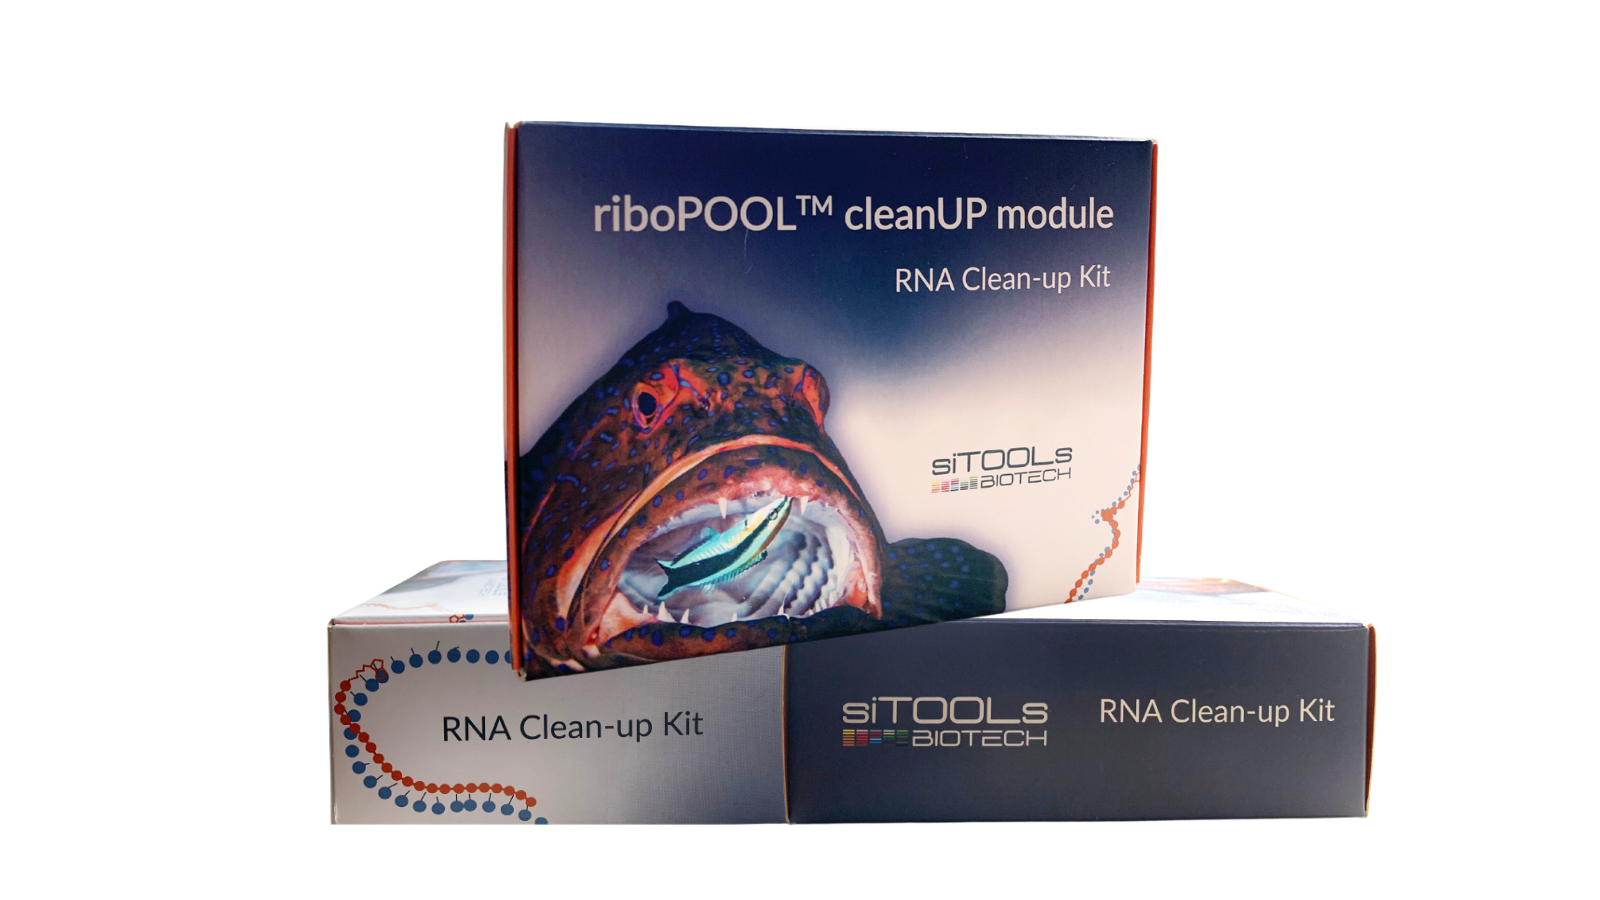 riboPOOL cleanUP module